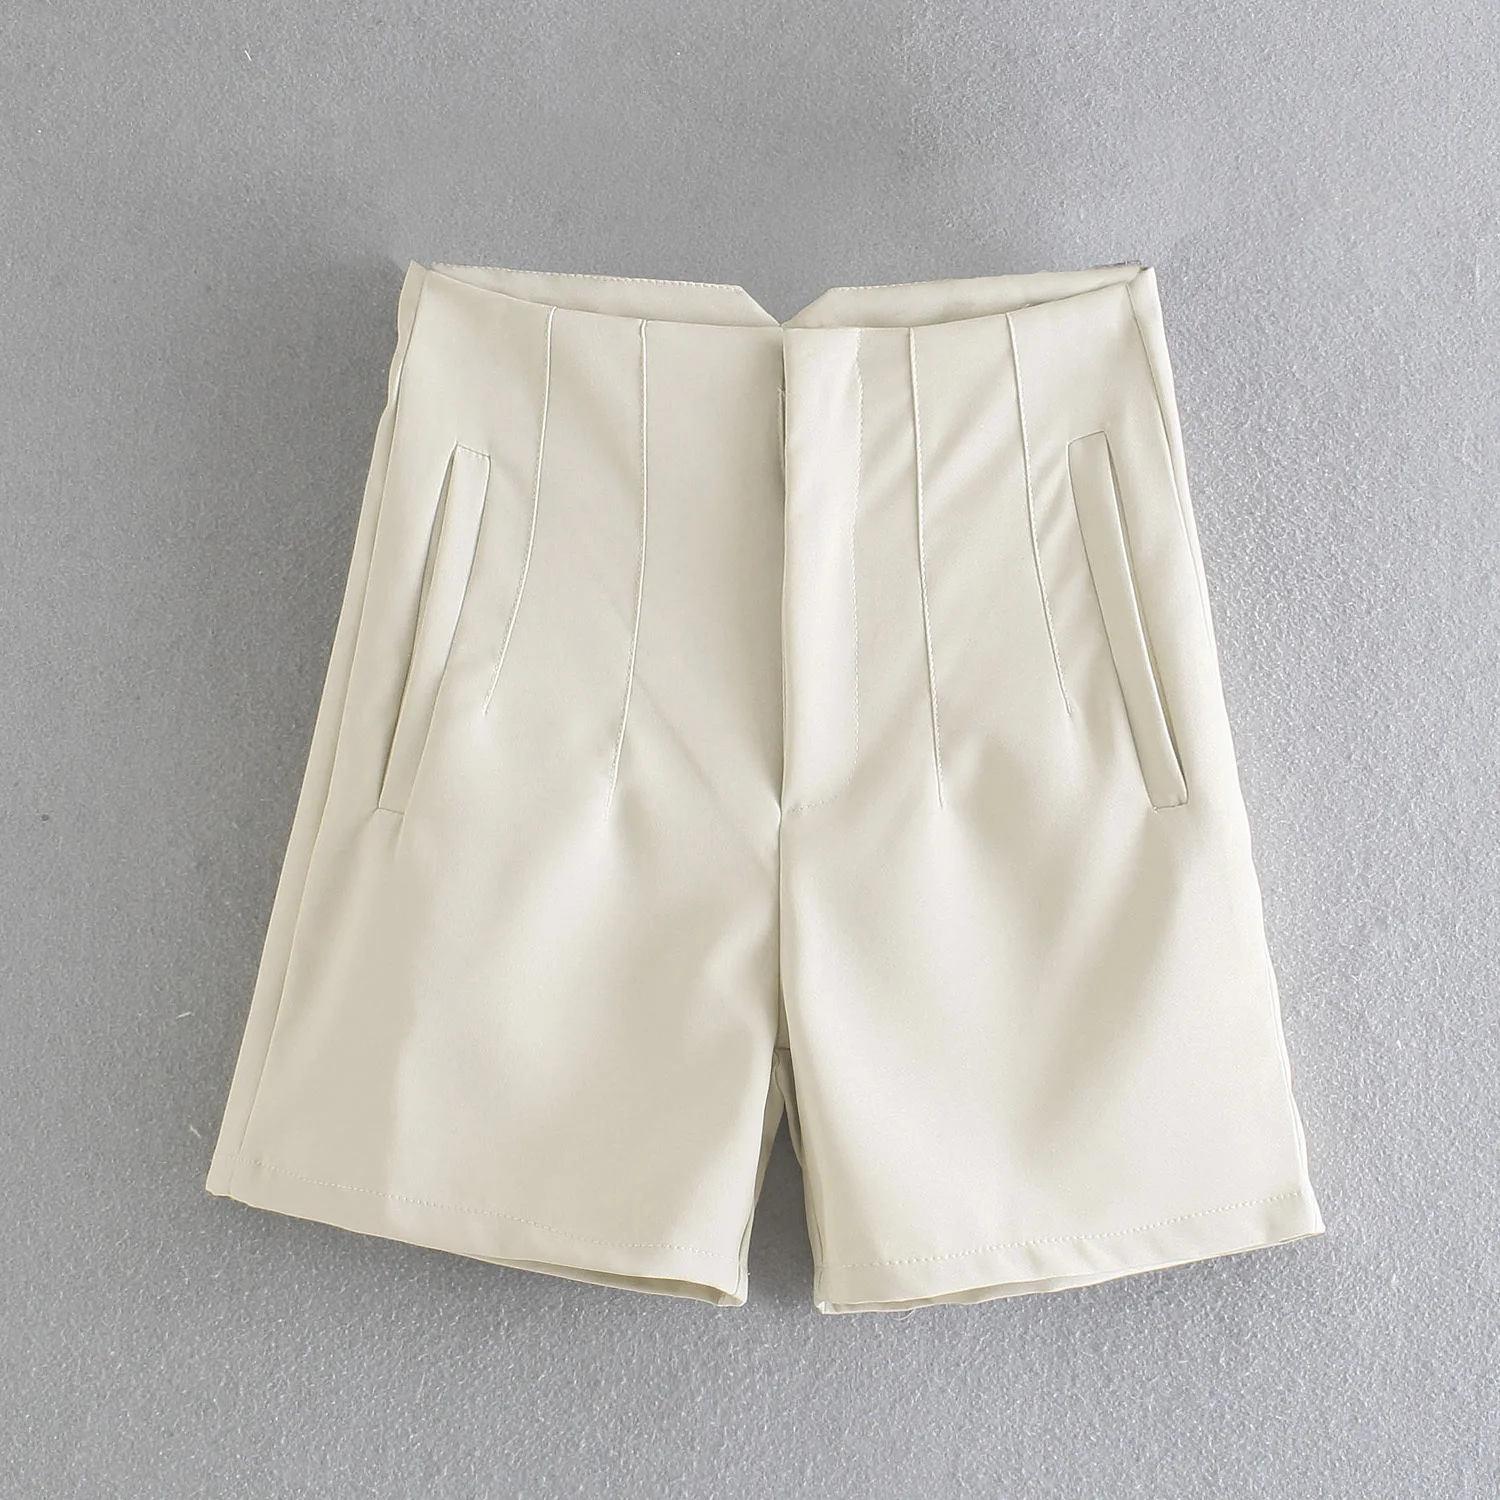 Summer 2022 Women High Waist Shorts Female Casual Solid Zipper Shorts Mujer Pantalon LY9385 shorts women Shorts